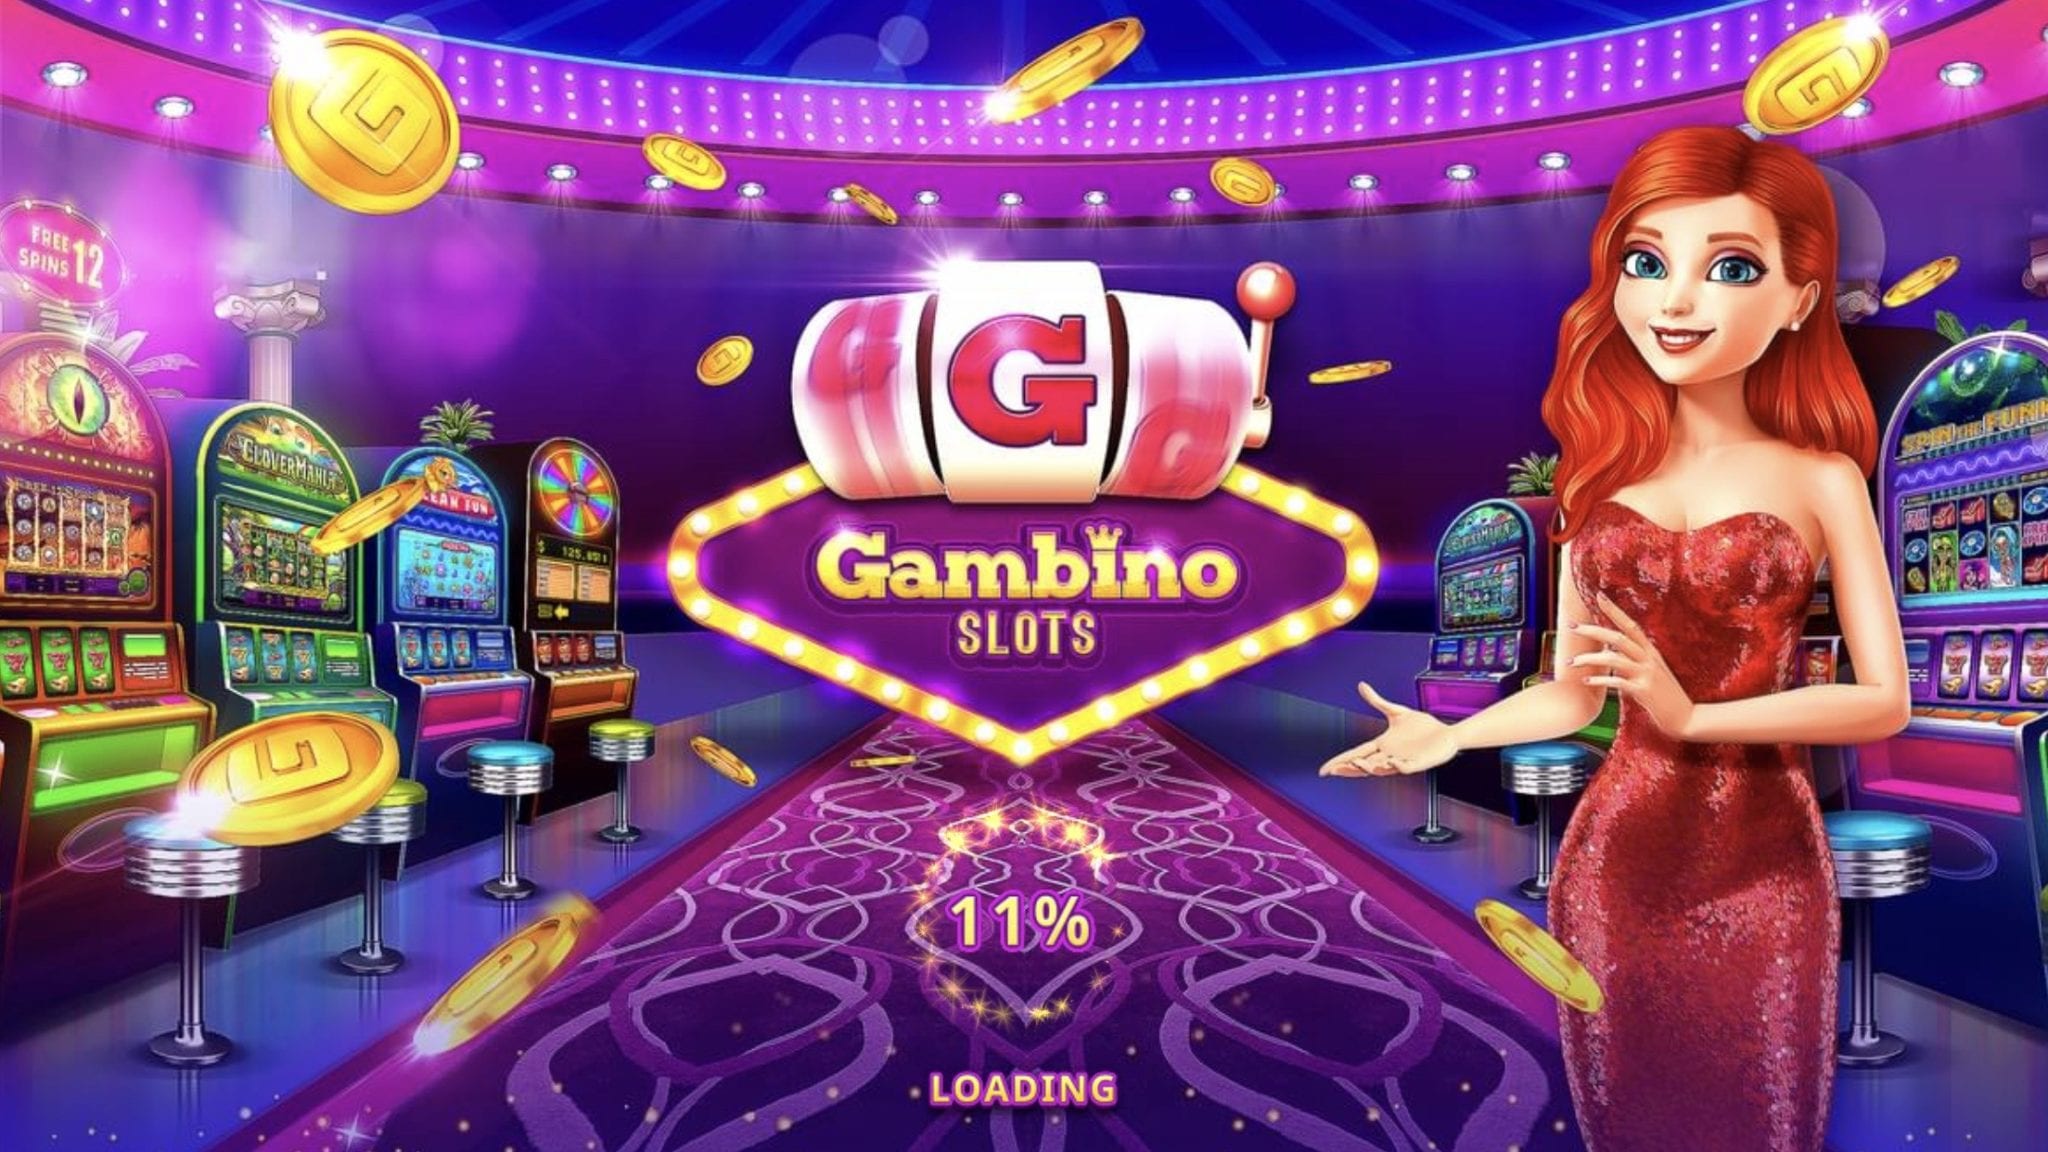 Gambino Slots, Slots, game, phone game, jackpot, spins, one armed bandit